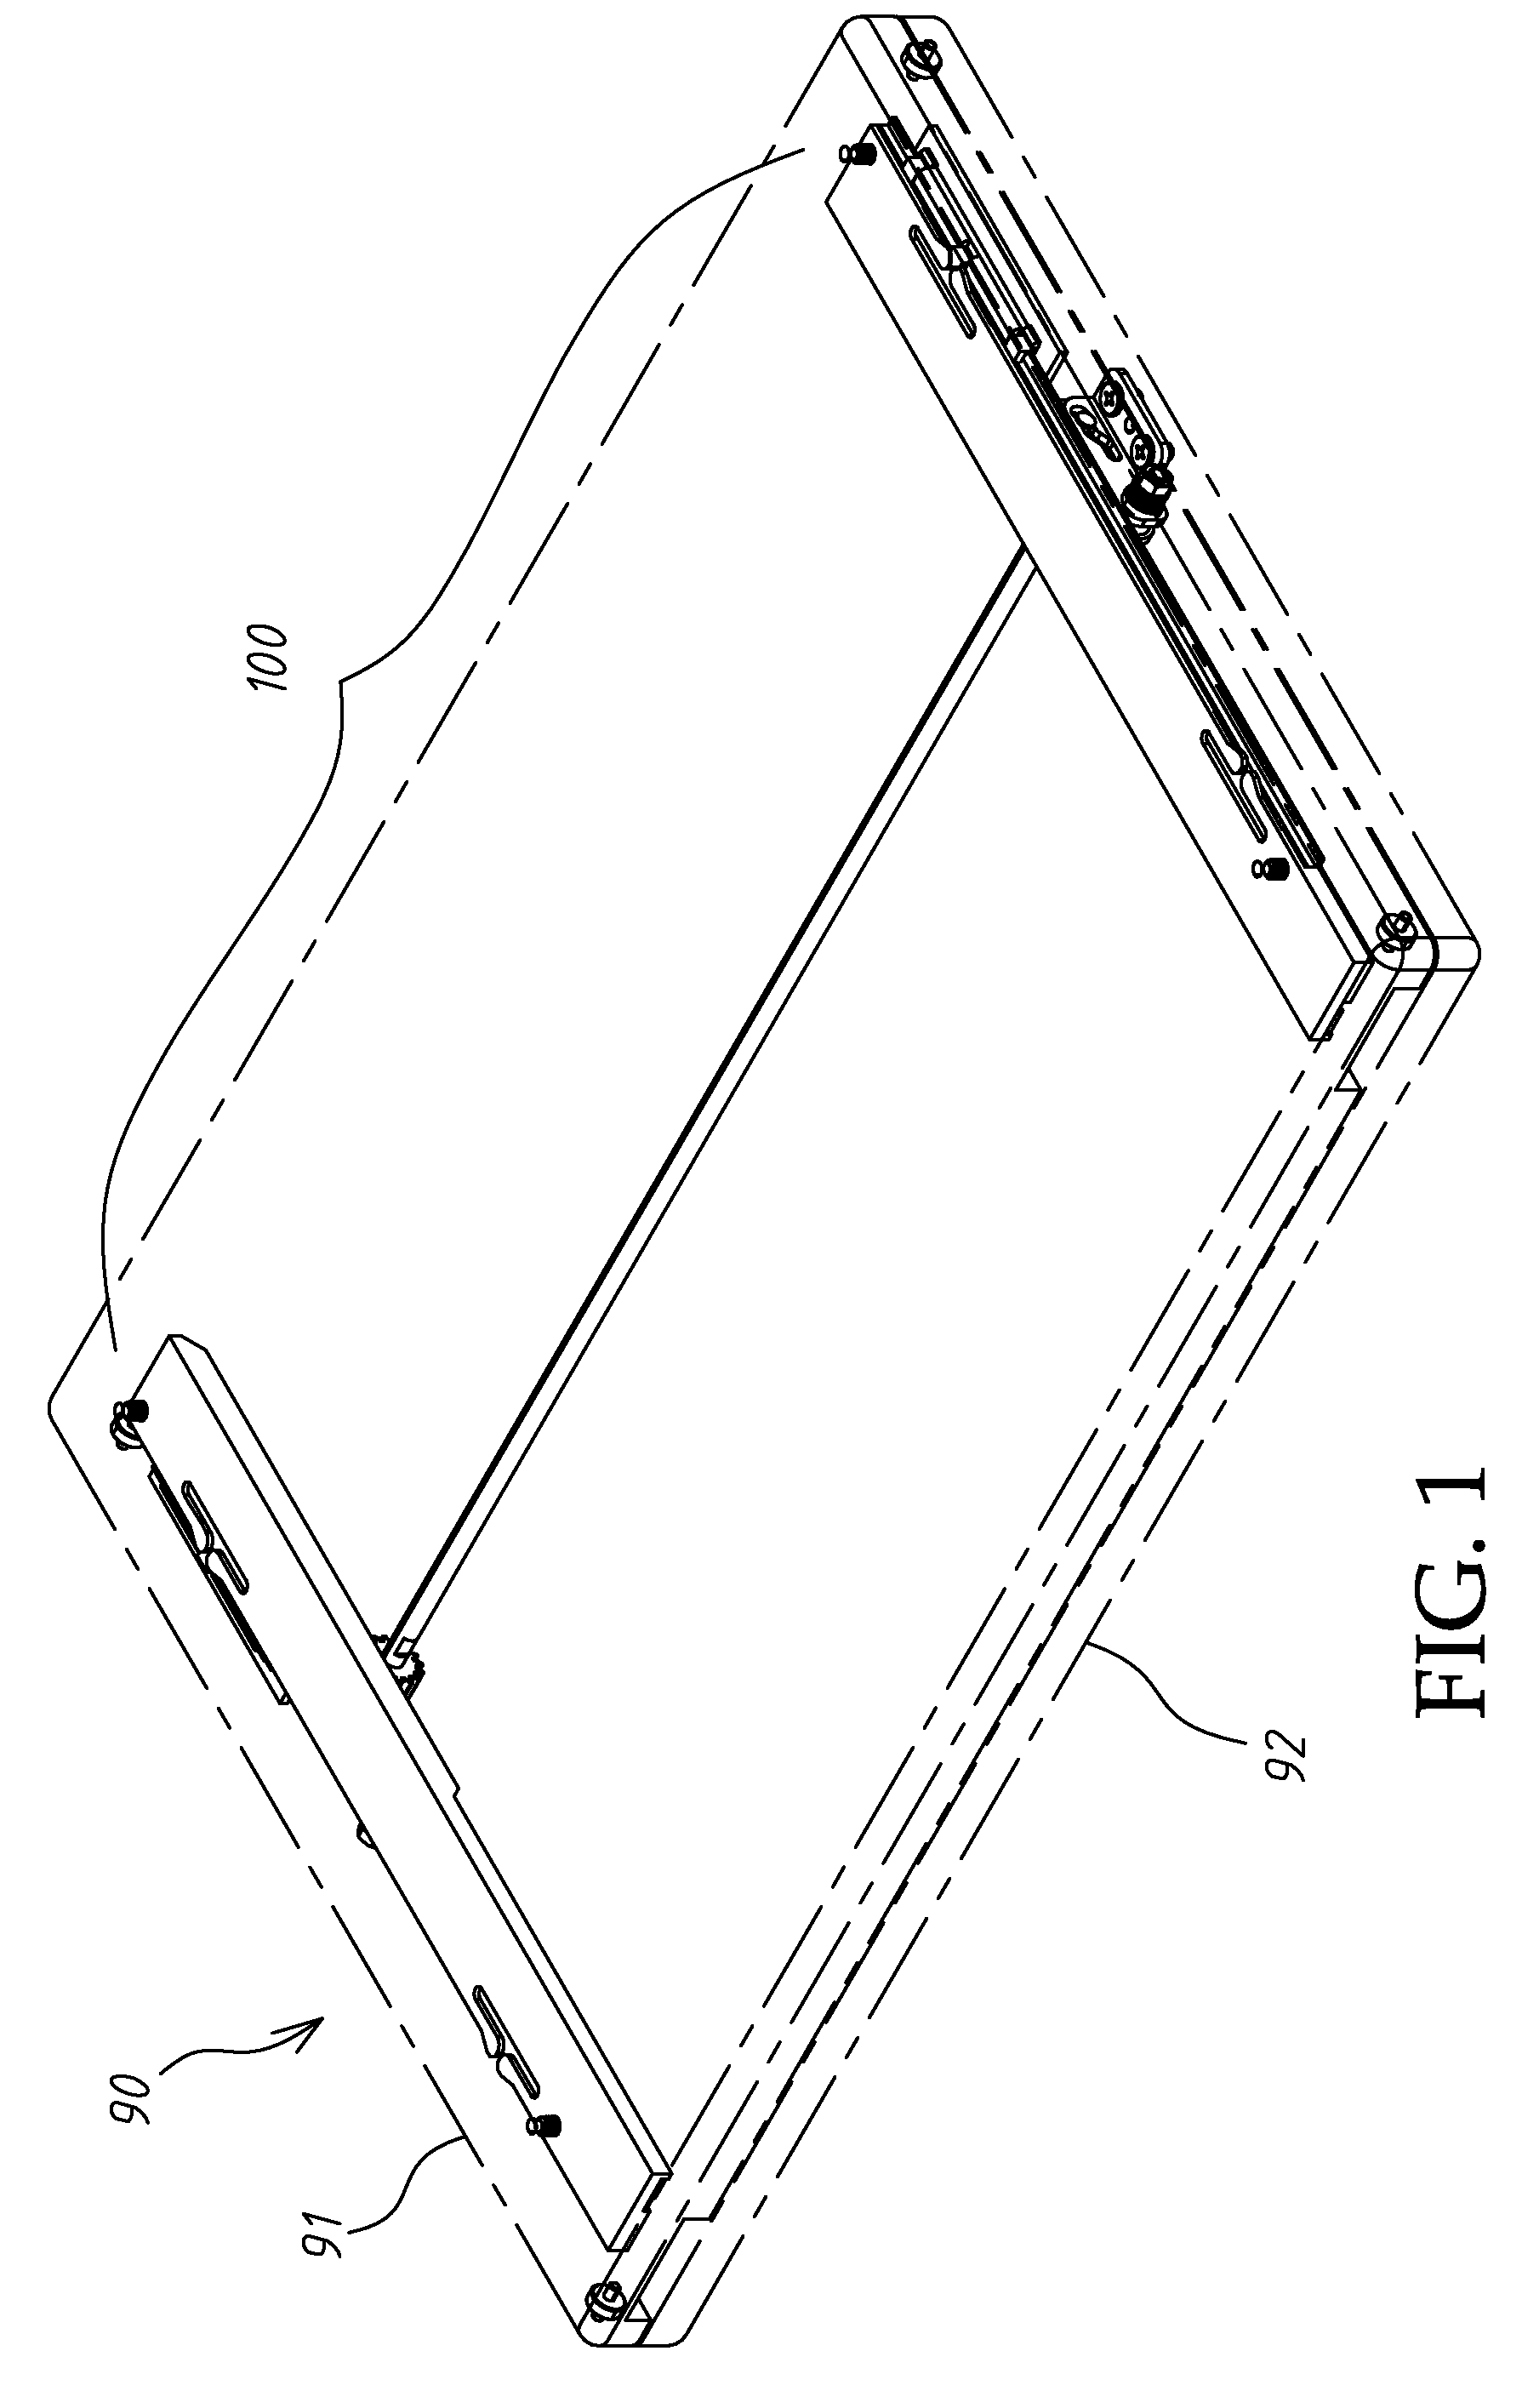 Hinge-slide cover mounting structure using a sheet metal bracket mechanism